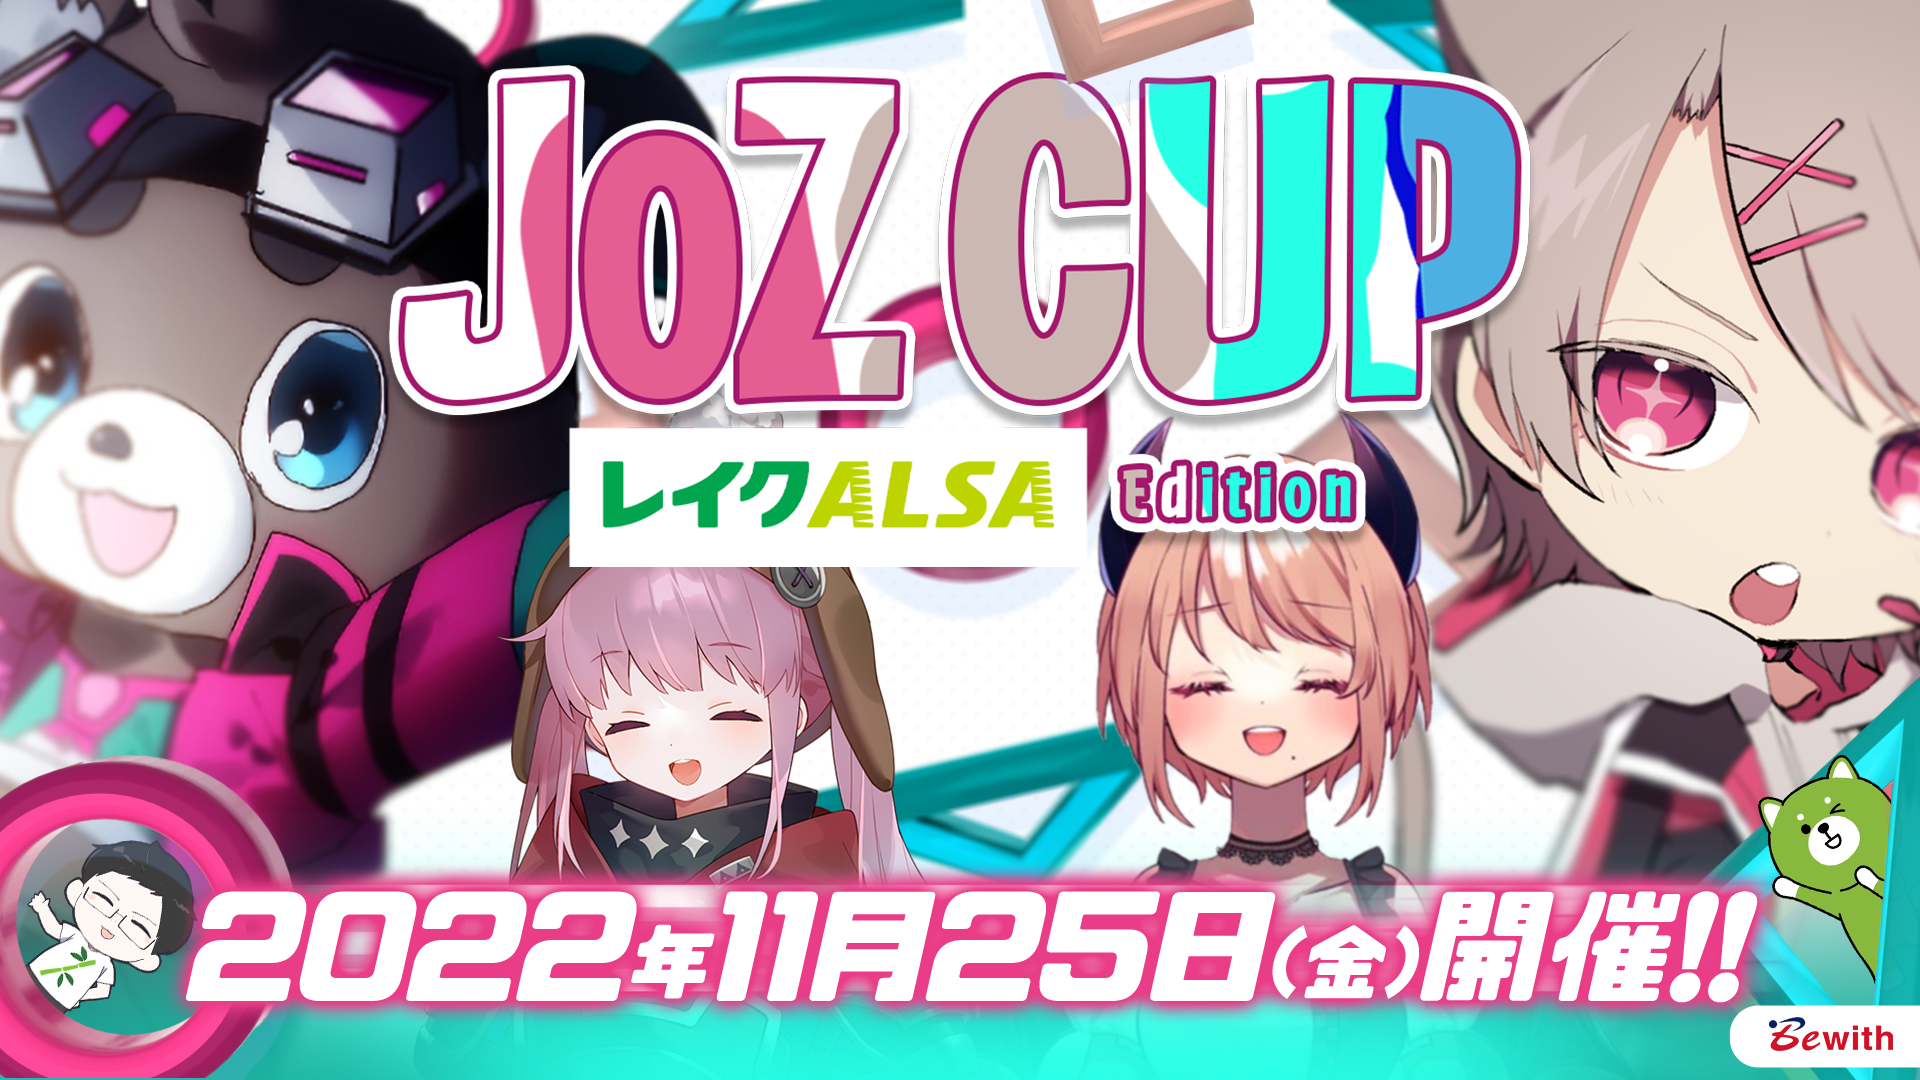 JOZCUP レイクALSA Edition